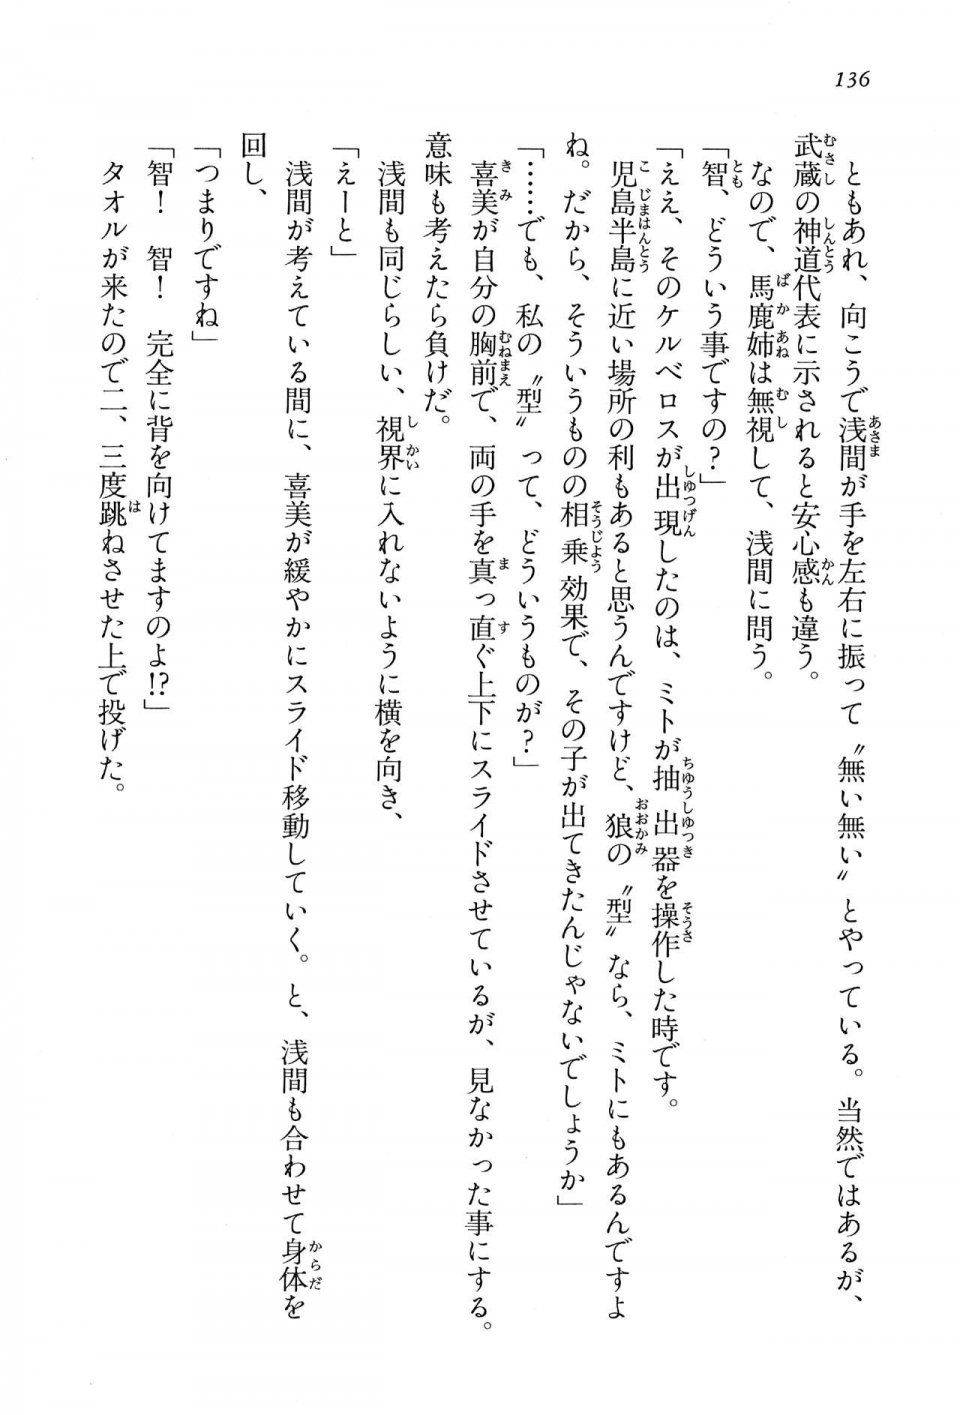 Kyoukai Senjou no Horizon BD Special Mininovel Vol 6(3B) - Photo #140